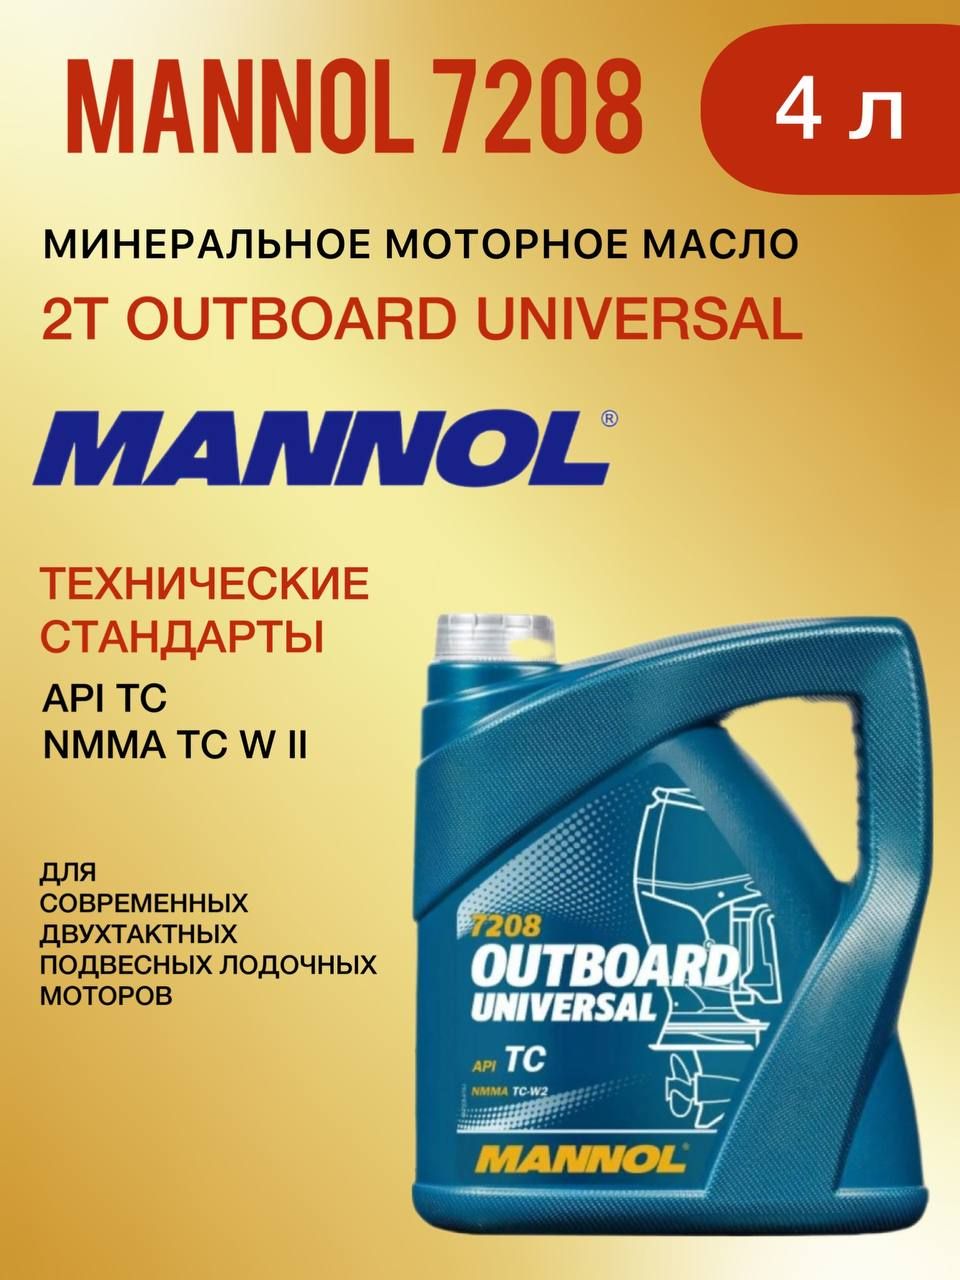 Mn7208-20_7208 Mannol outboard Universal 20 л. минеральное моторное масло 2т. Масло моторное outboard Universal (4л). Манол 2т оутборд универсал. Mineral Universal Oil 20w-50.